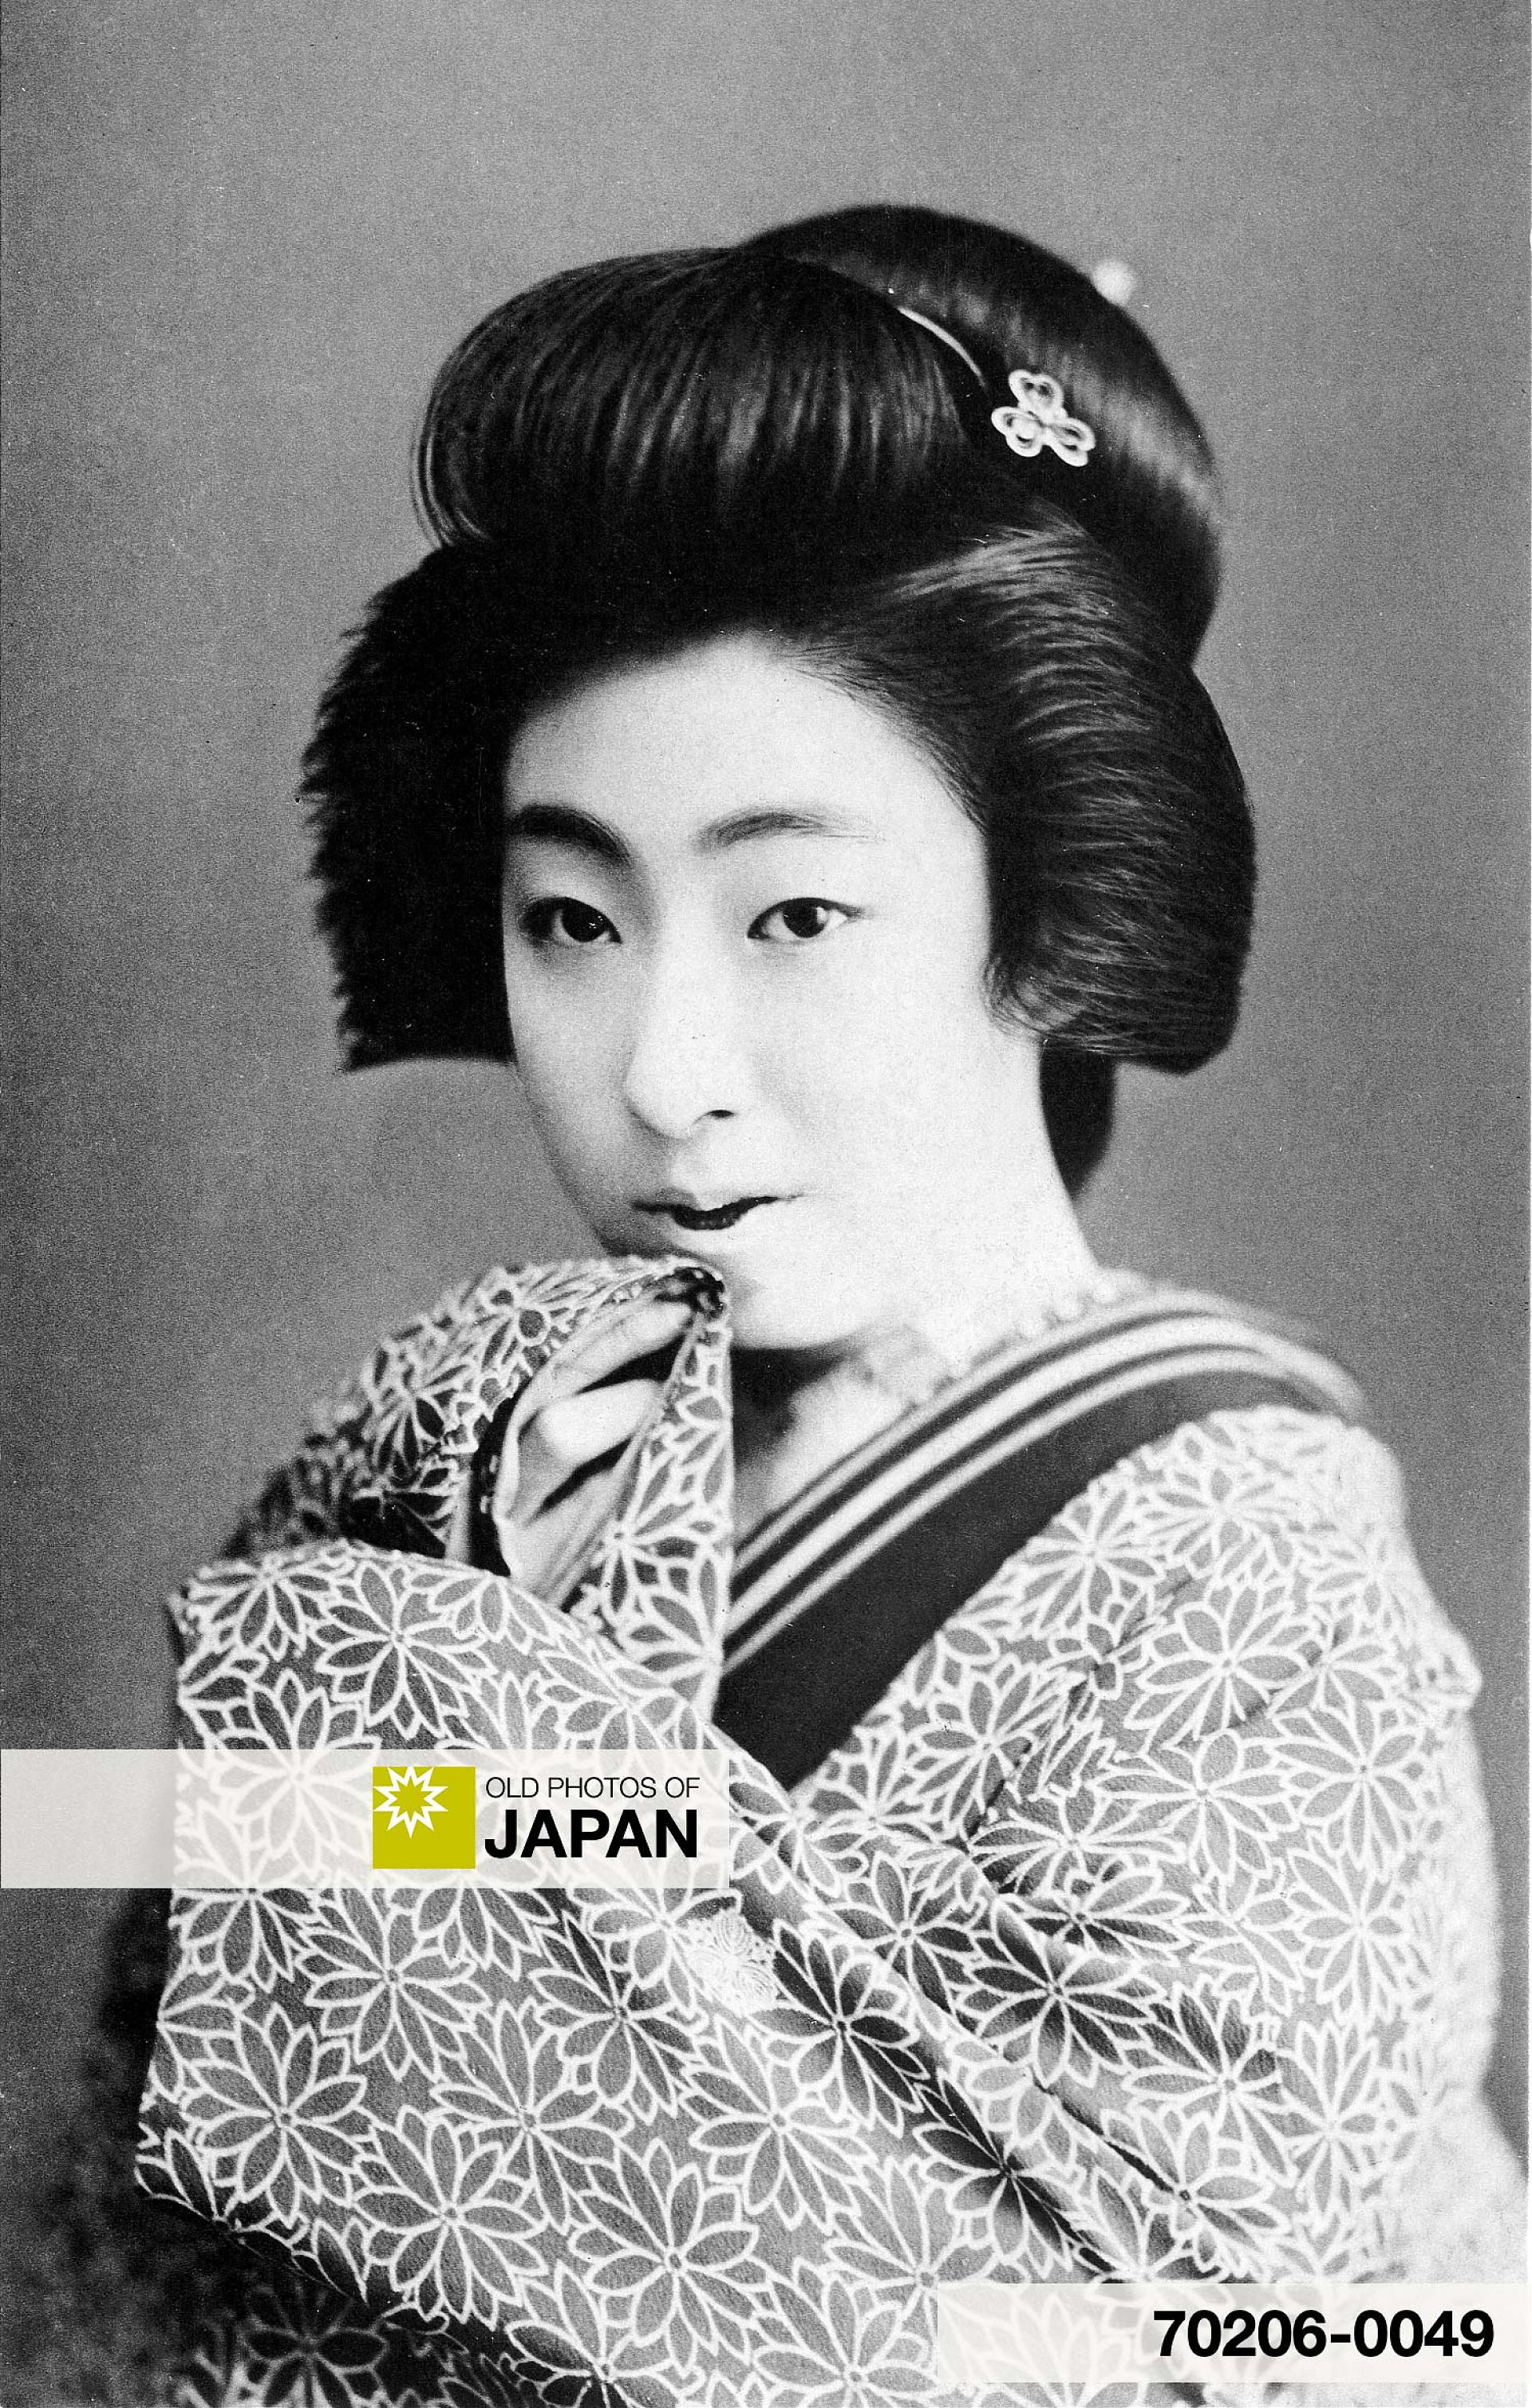 70206-0049 - Portrait of Japanese Woman in Kimono, 1920s